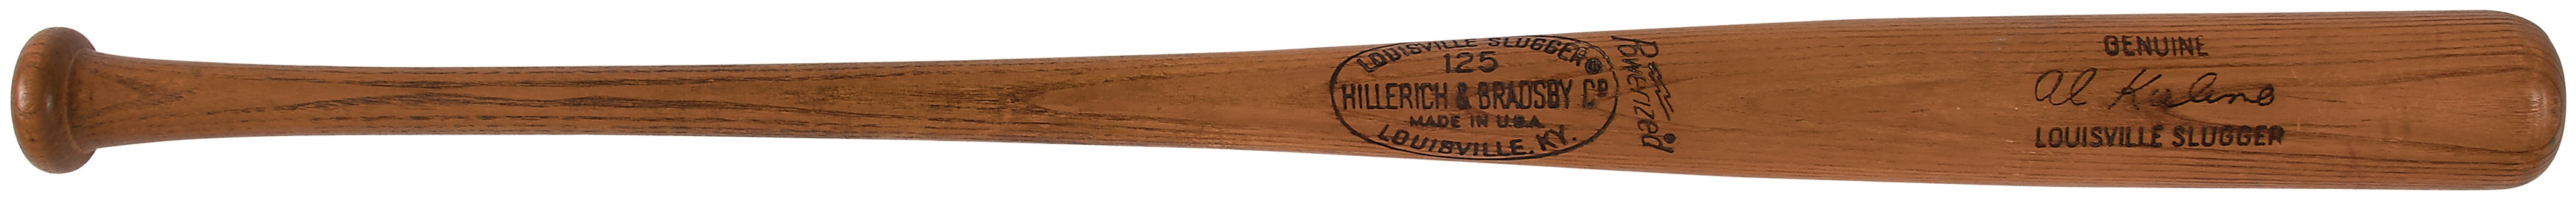 Baseball Equipment - 1973-74 Al Kaline Game Used Bat